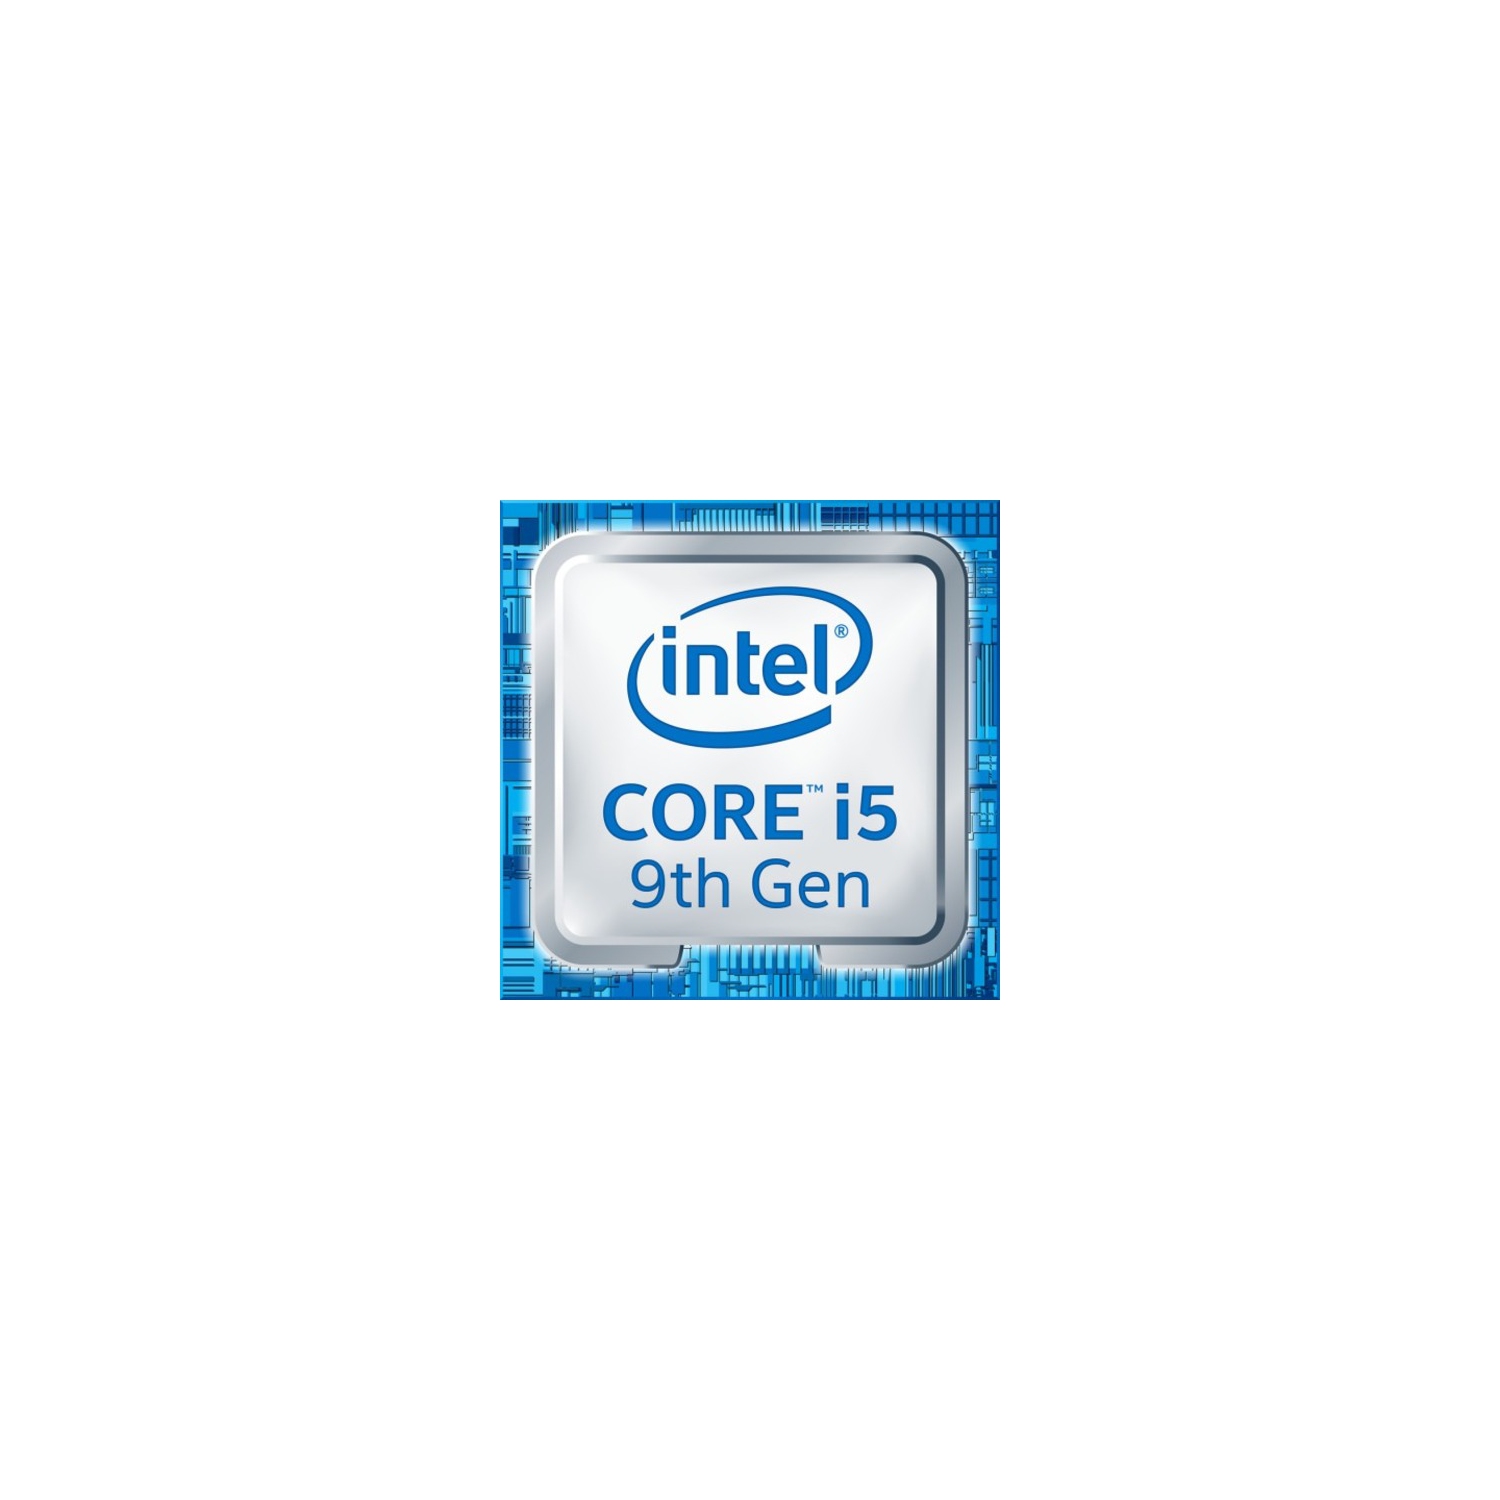 Intel Core i5-9600K Coffee Lake 6-Core 3.7 GHz (4.6 GHz Turbo) - BX80684I59600K Desktop Processor Intel UHD Graphics 630